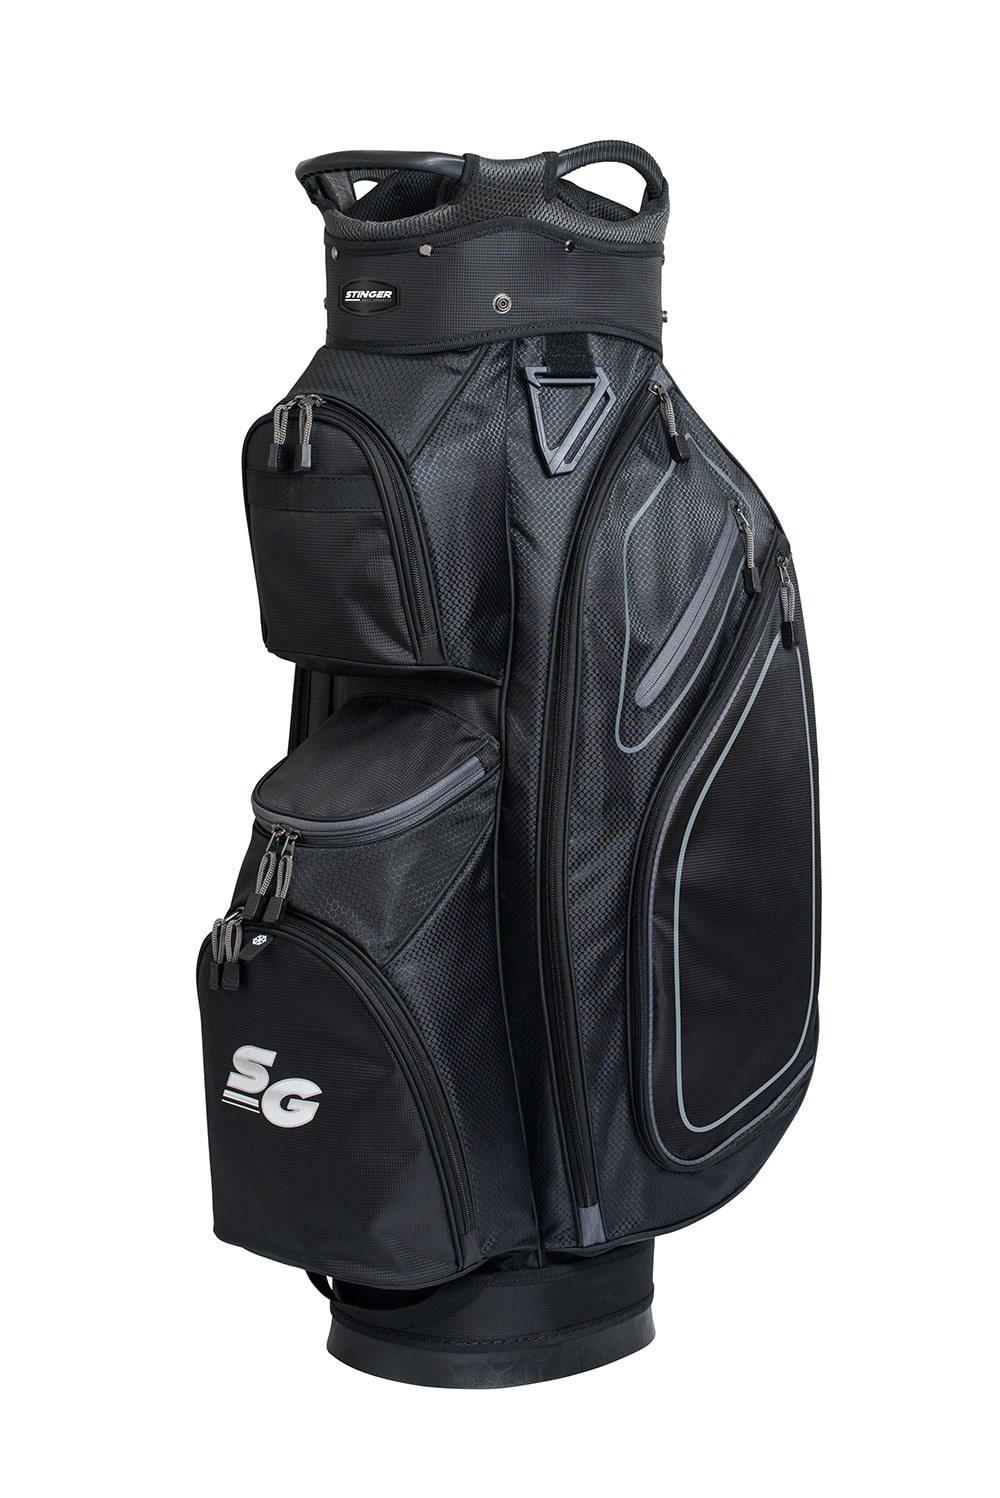 Stinger - Lightweight Golf Bag Black/Grey - AJM Autodrive